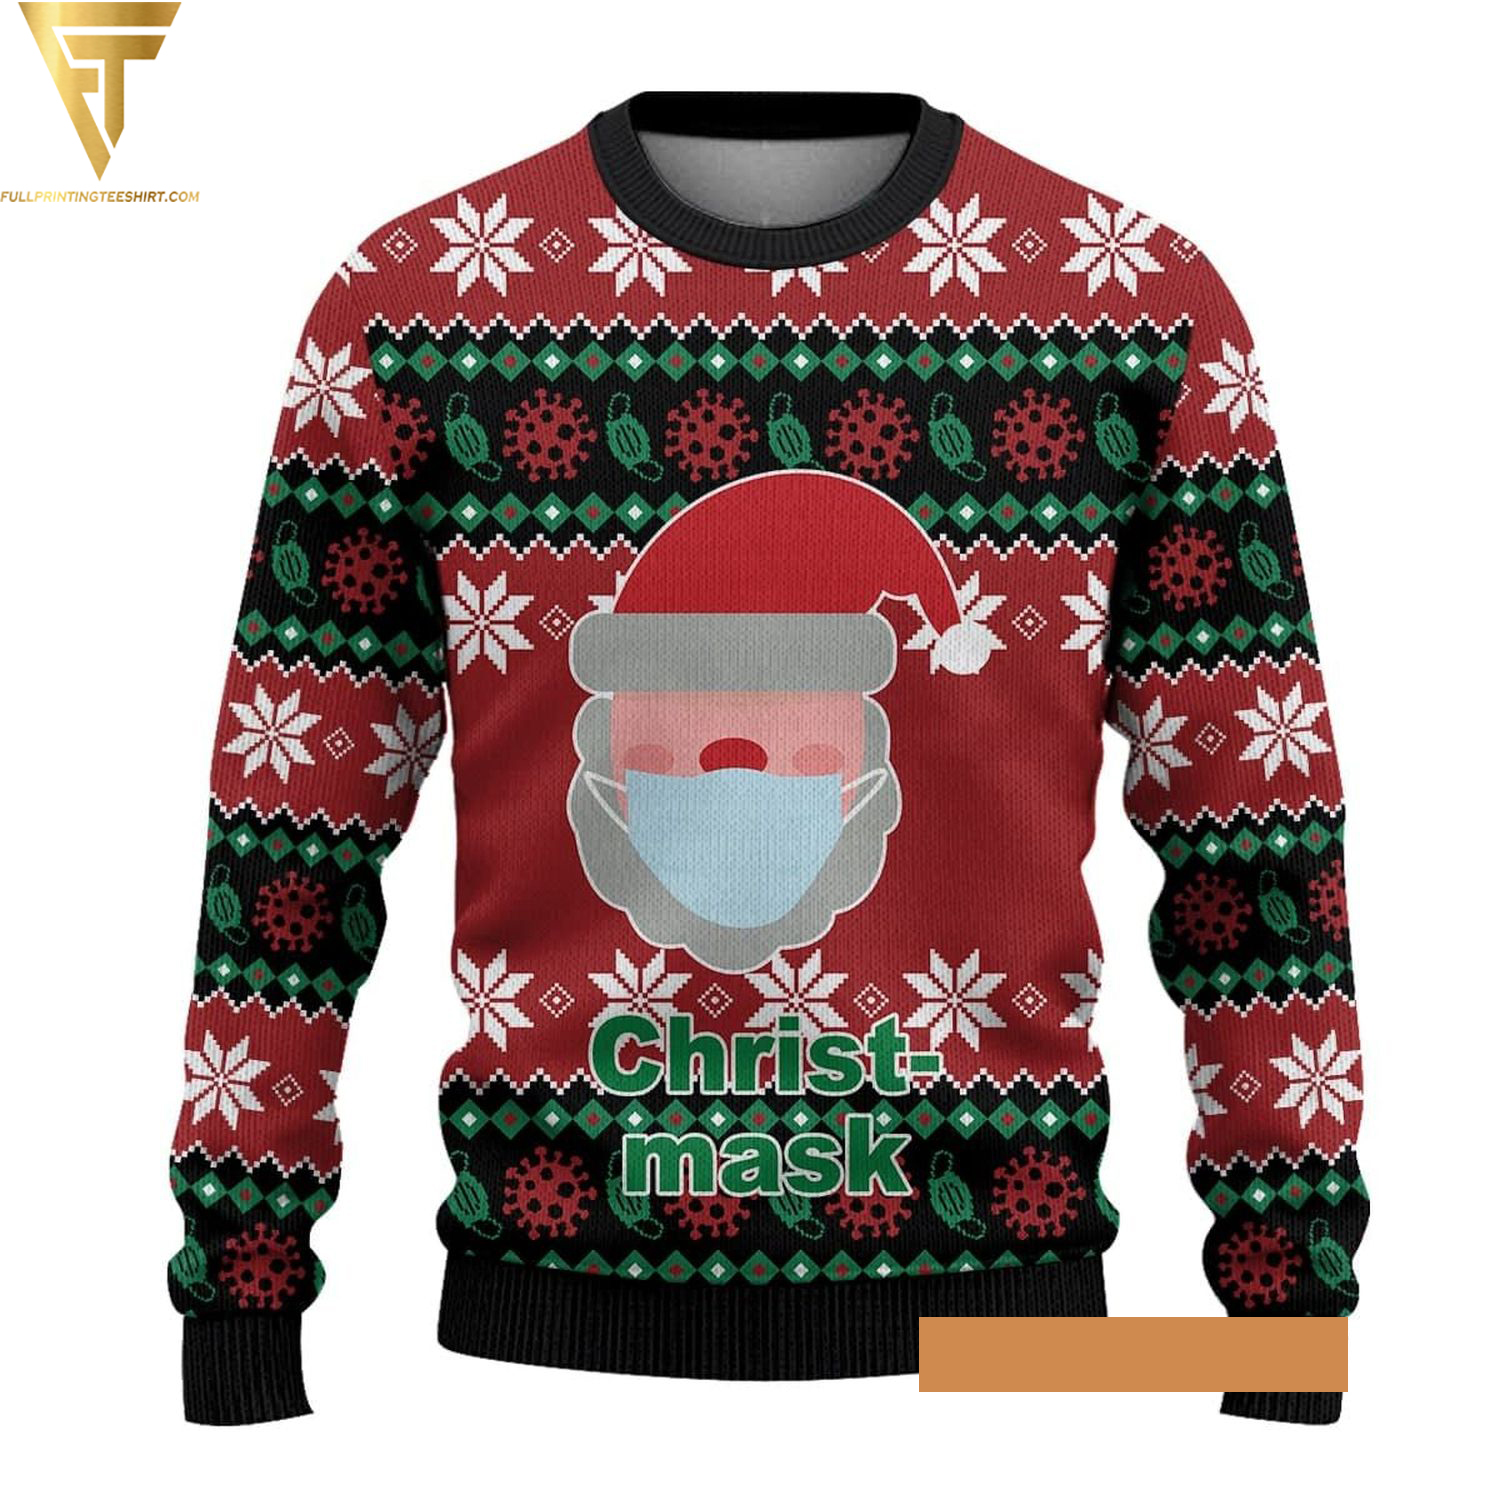 Santa claus chris-mask ugly christmas sweater - Copy (3)